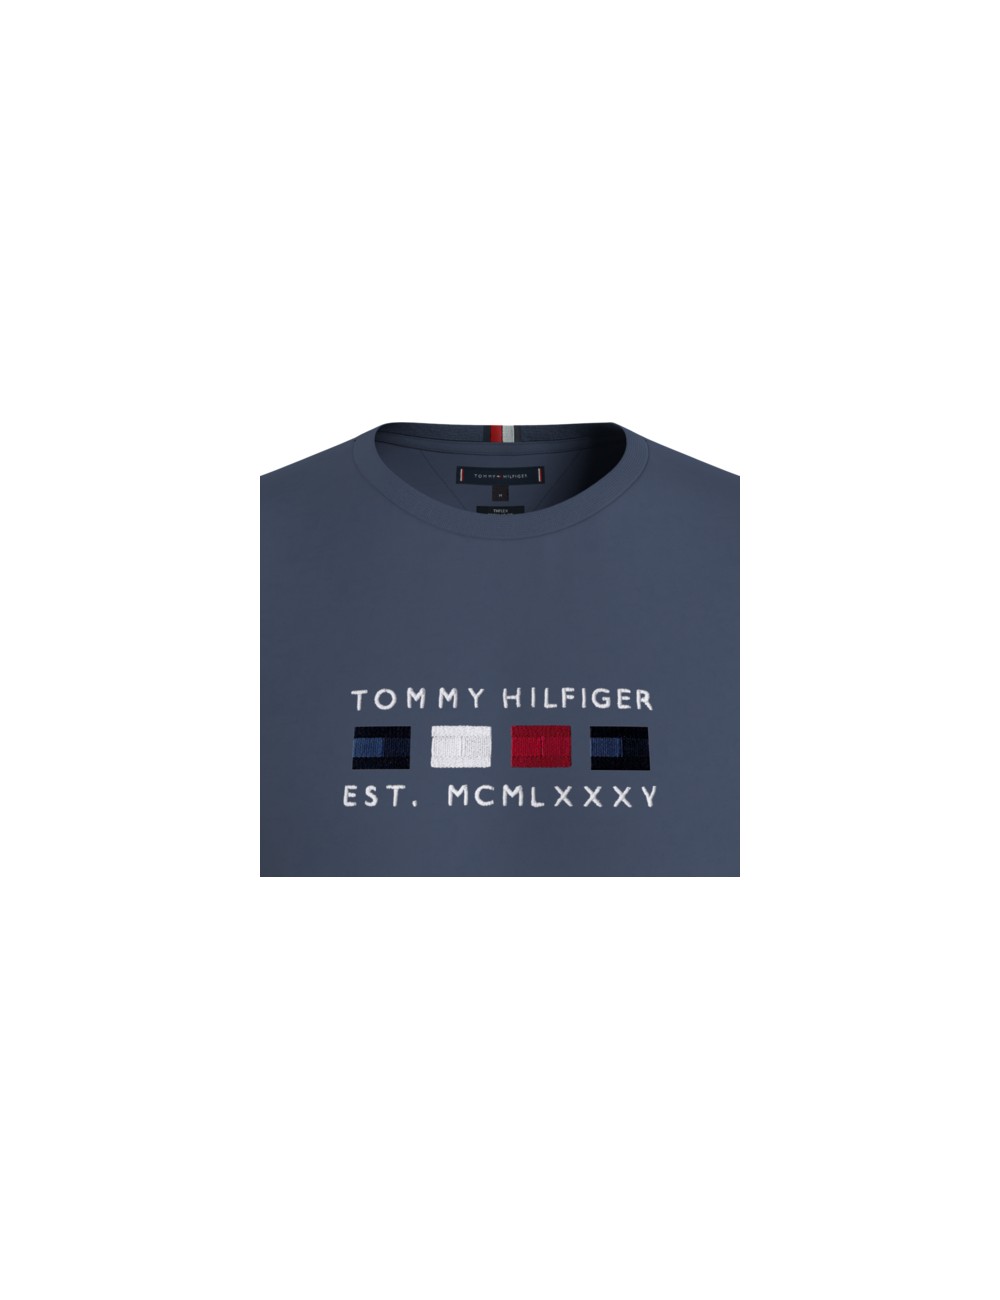 TOMMY HILFIGER INDIGO BLUE MEN'S T-SHIRT